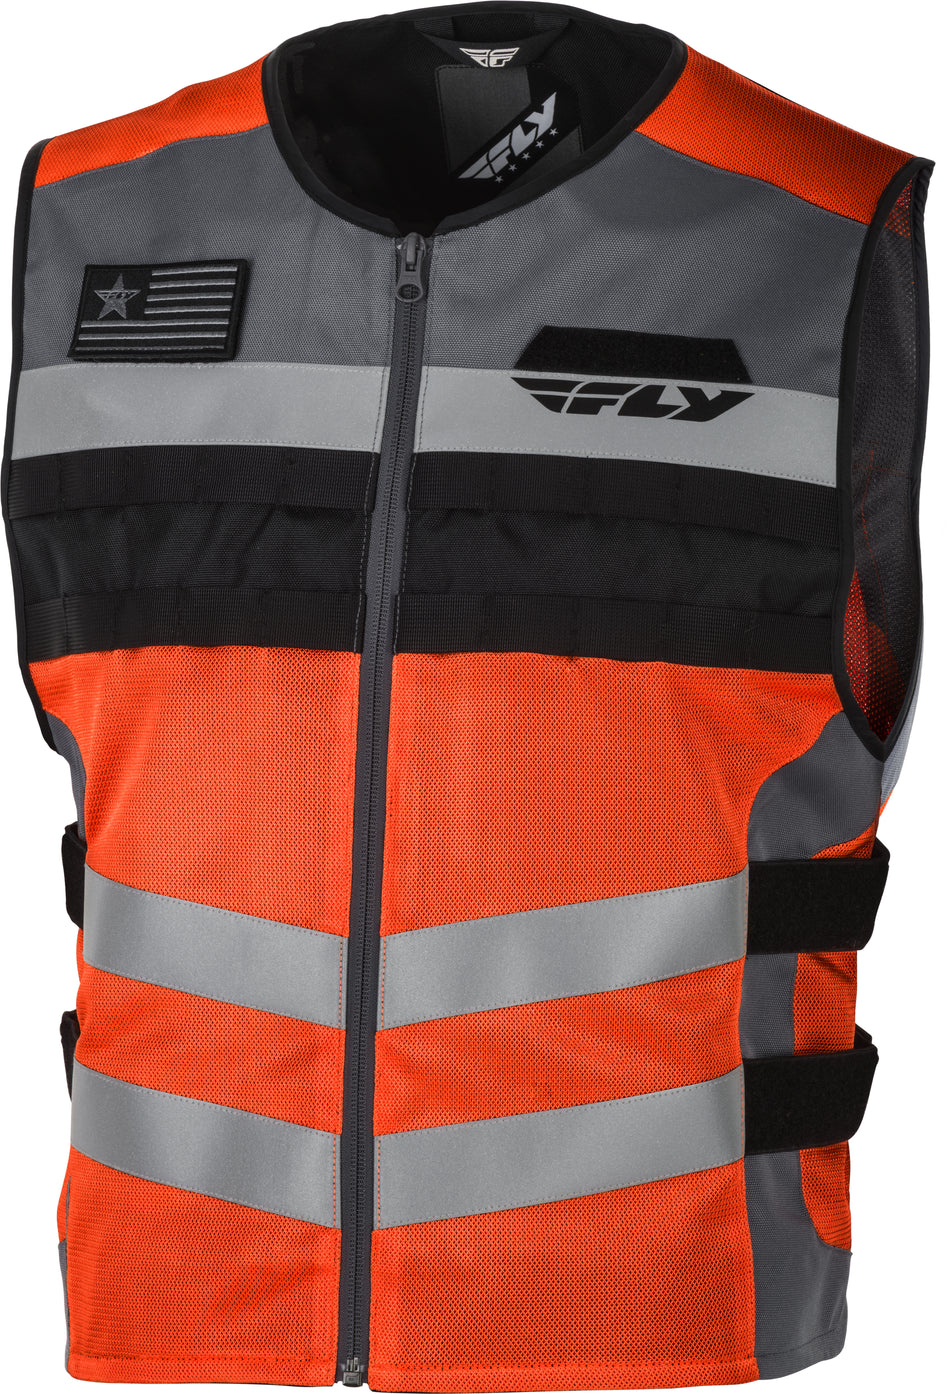 FLY RACING Fast-Pass Vest Neon Orange Sm/Md #6179 478-6002~3